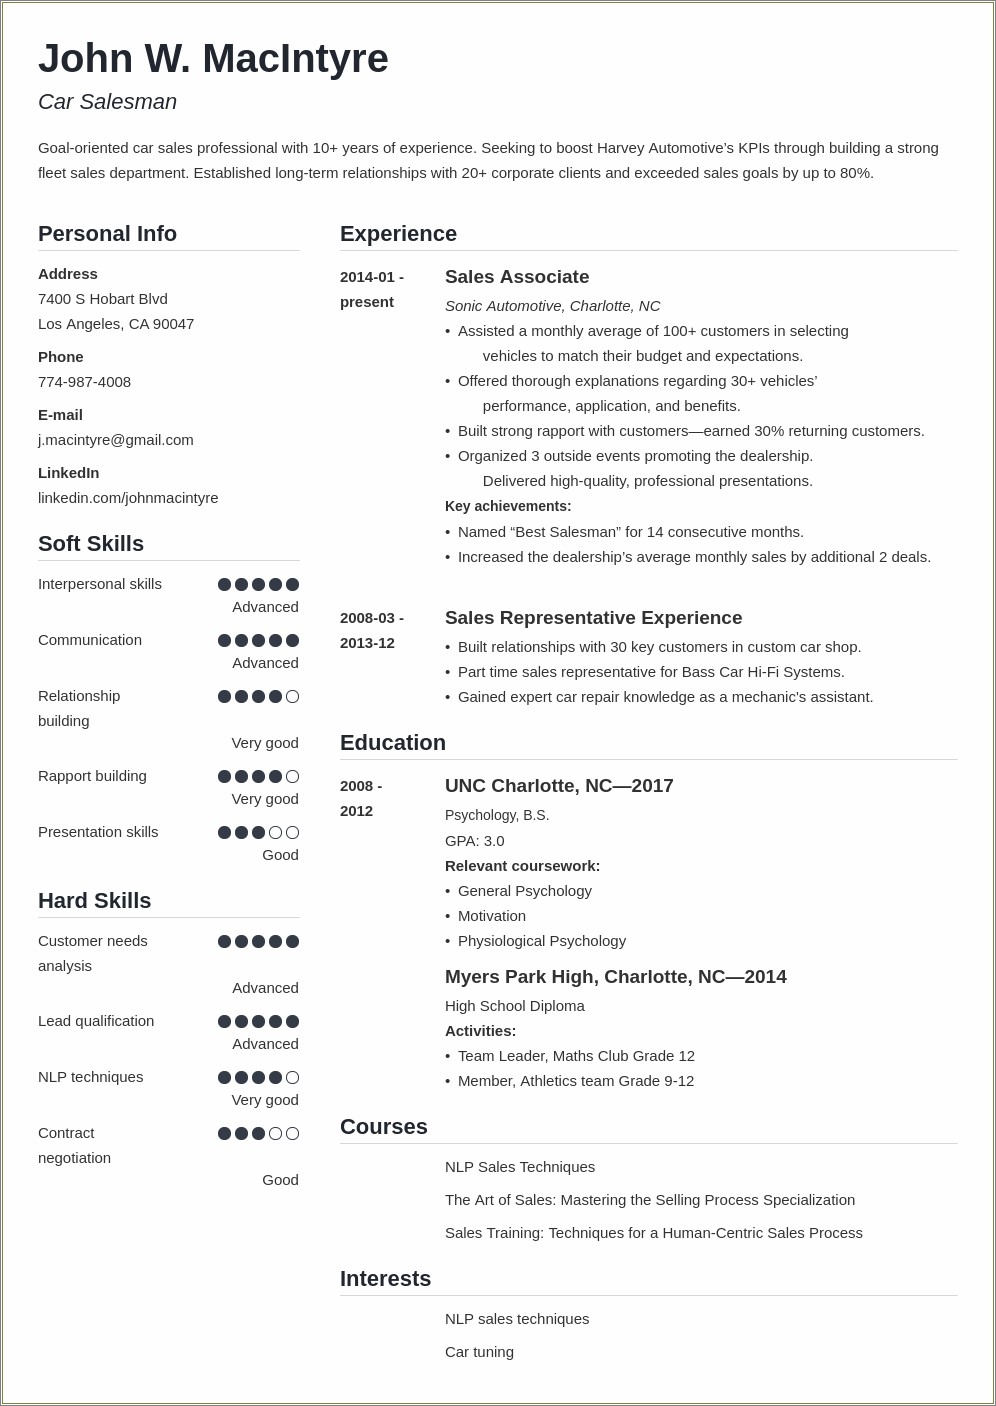 Car Sales Consultant Job Description For Resume